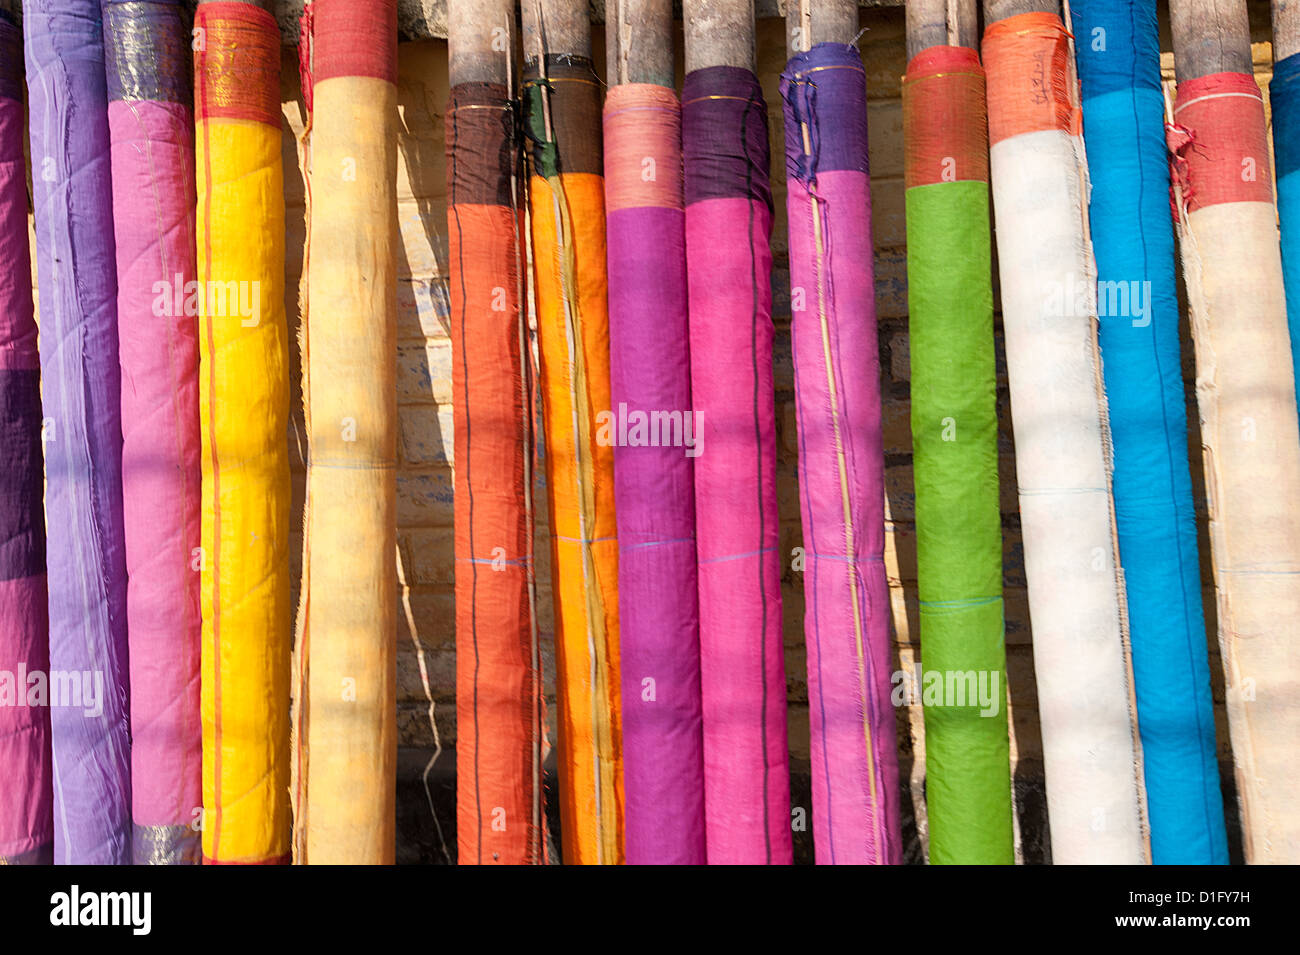 Sari longitudes de algodón de colores brillantes, tejidas a mano en telares de aldea, Kalna, Bengala Occidental, India, Asia Foto de stock